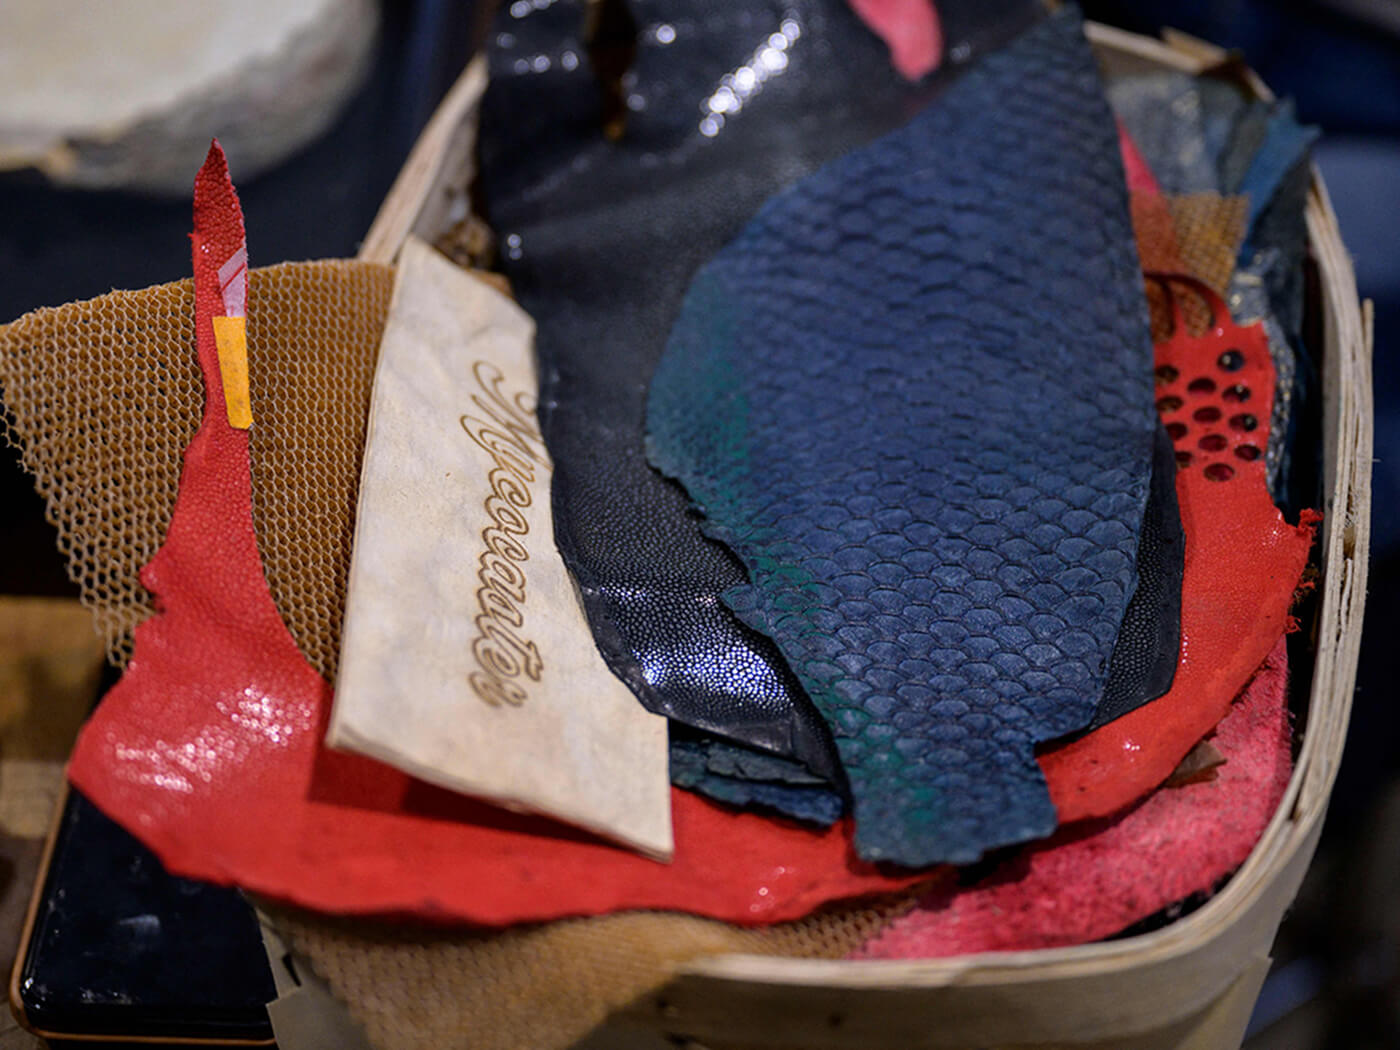 Samples of biomaterials like fish leather, mycelium, recycled paper and Kombucha leather in Rachel Rosenkrantz’s studio